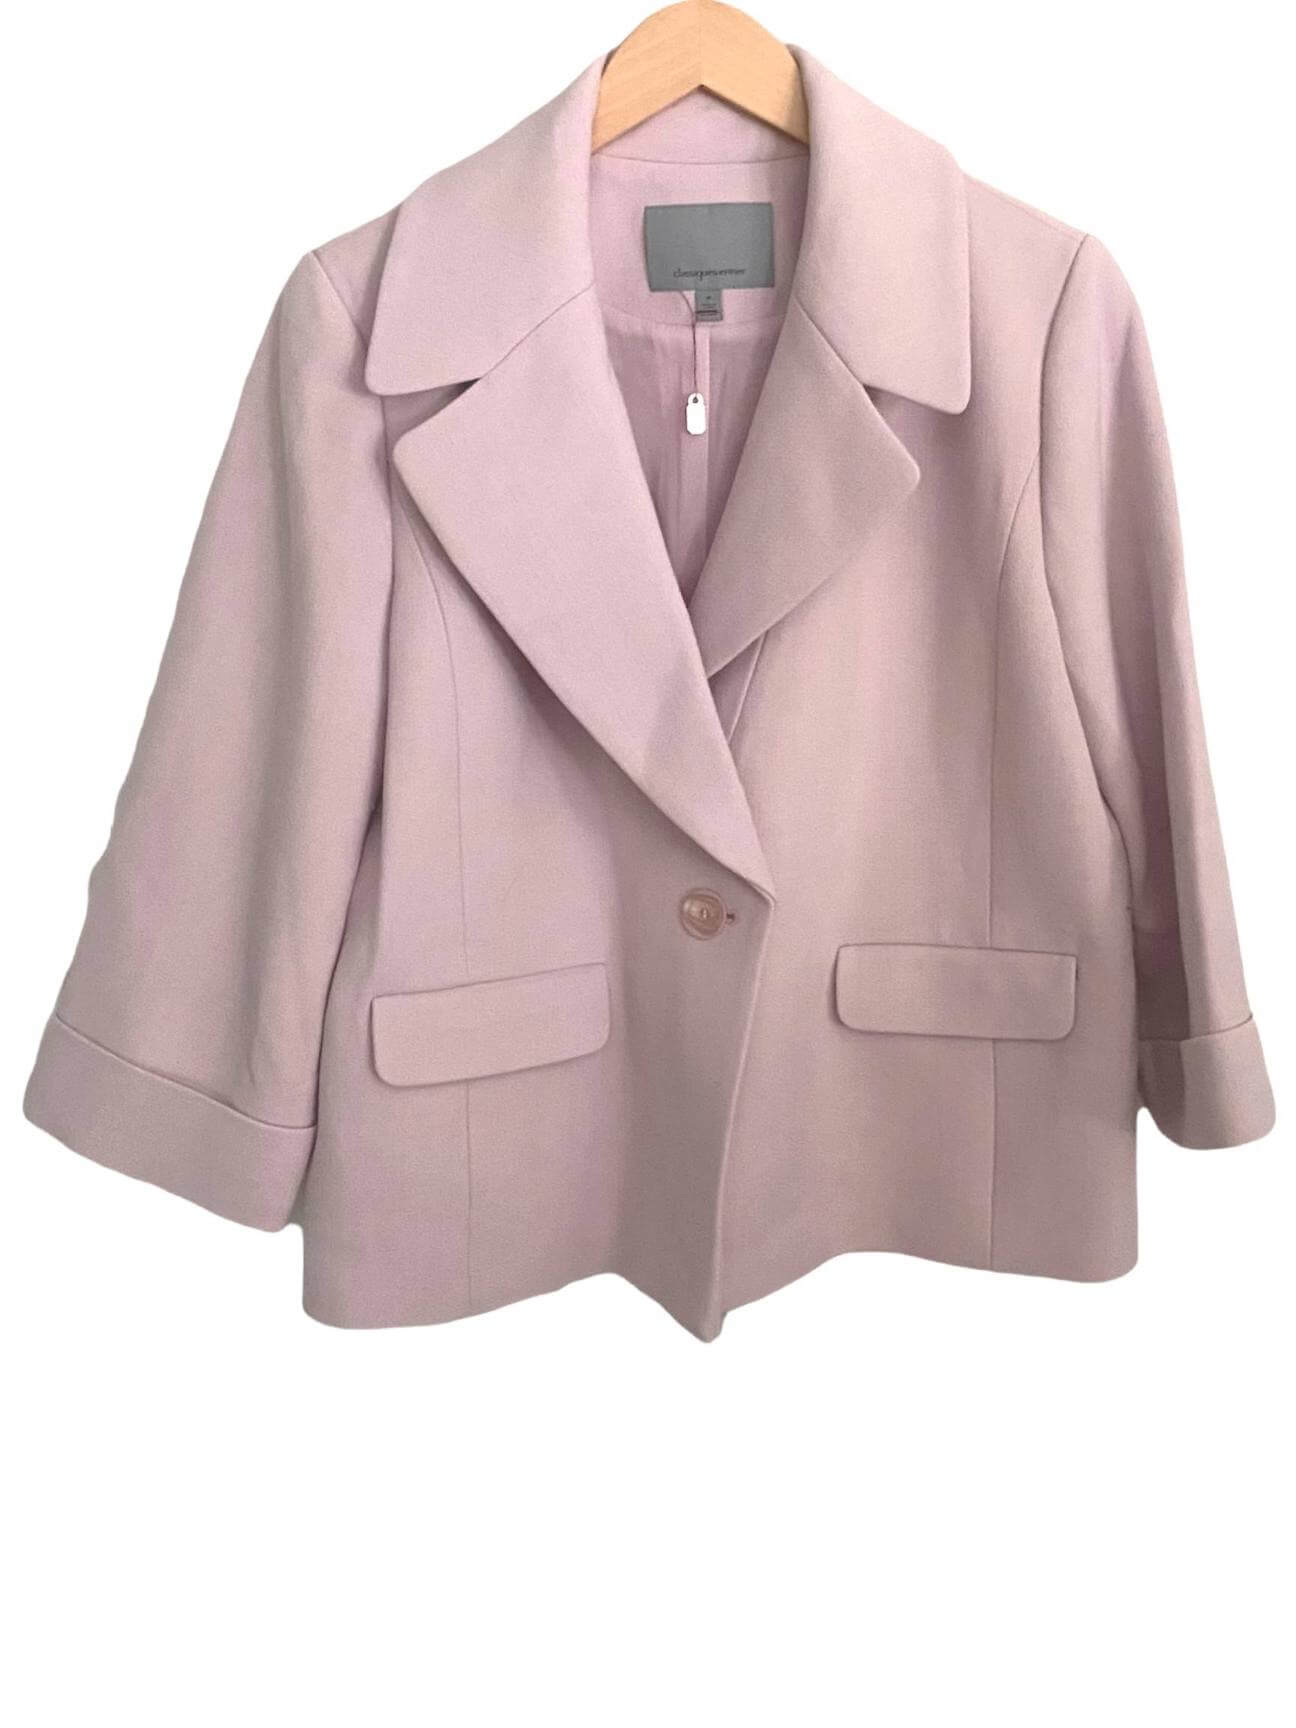 Soft Summer CLASSIQUES ENTIER pink wool blazer